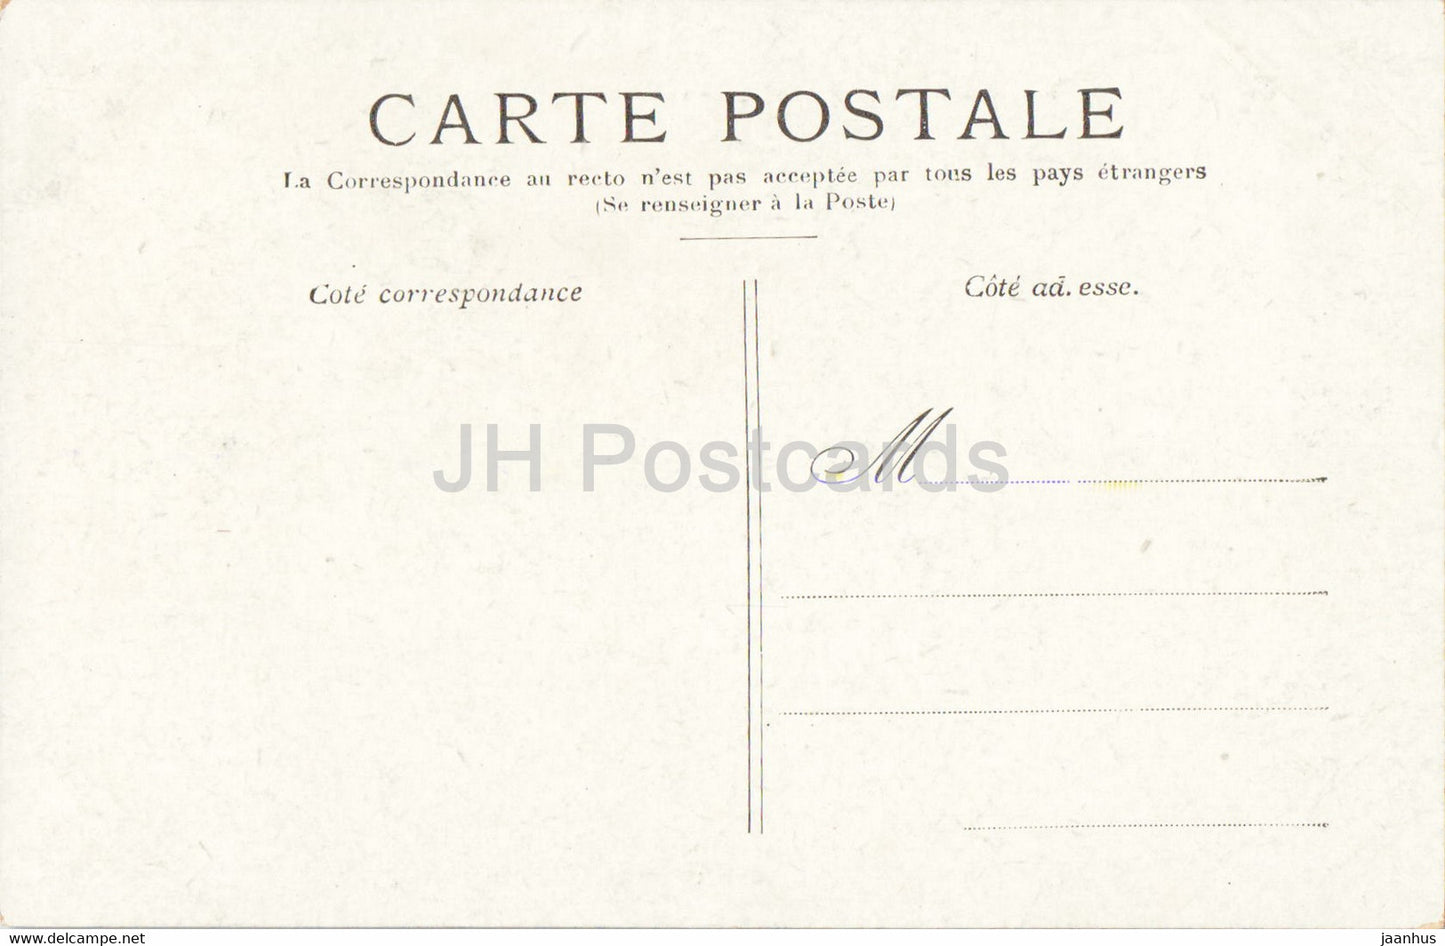 Versailles - Grand Trianon - carte postale ancienne - France - inutilisée